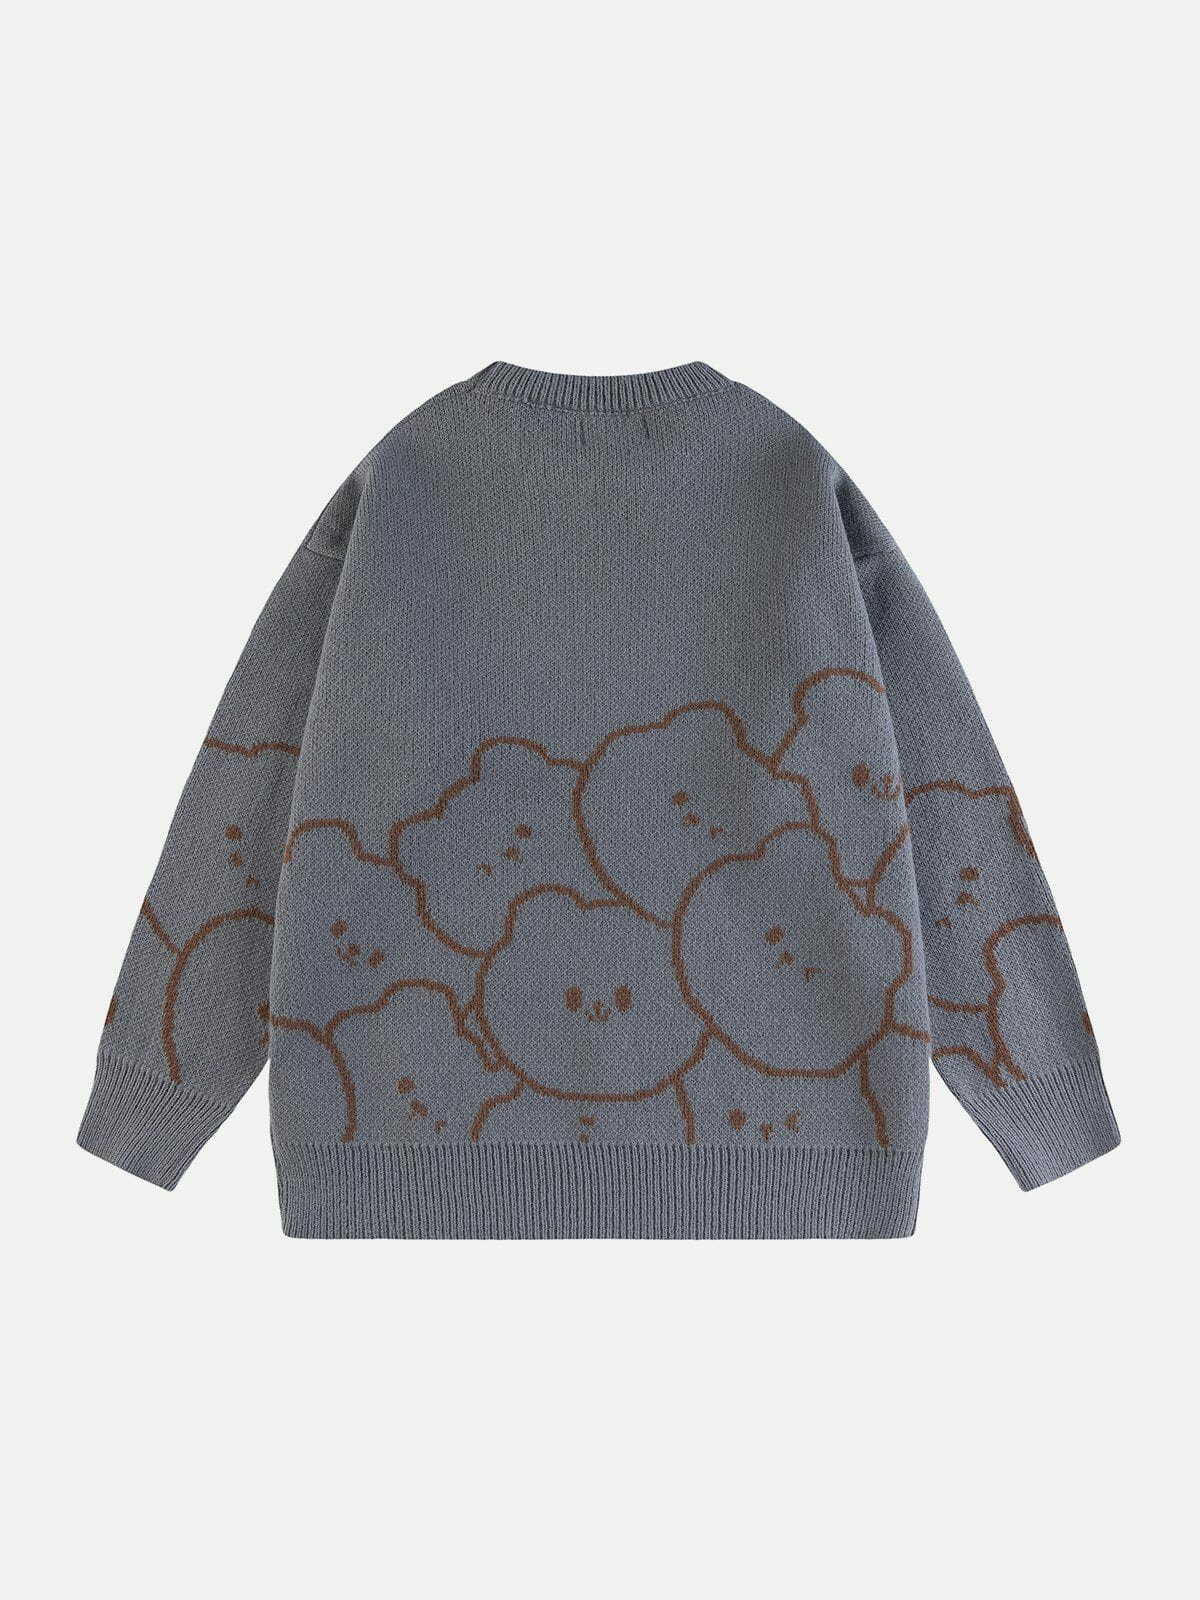 retro jacquard bear sweater quirky vintage charm 6477